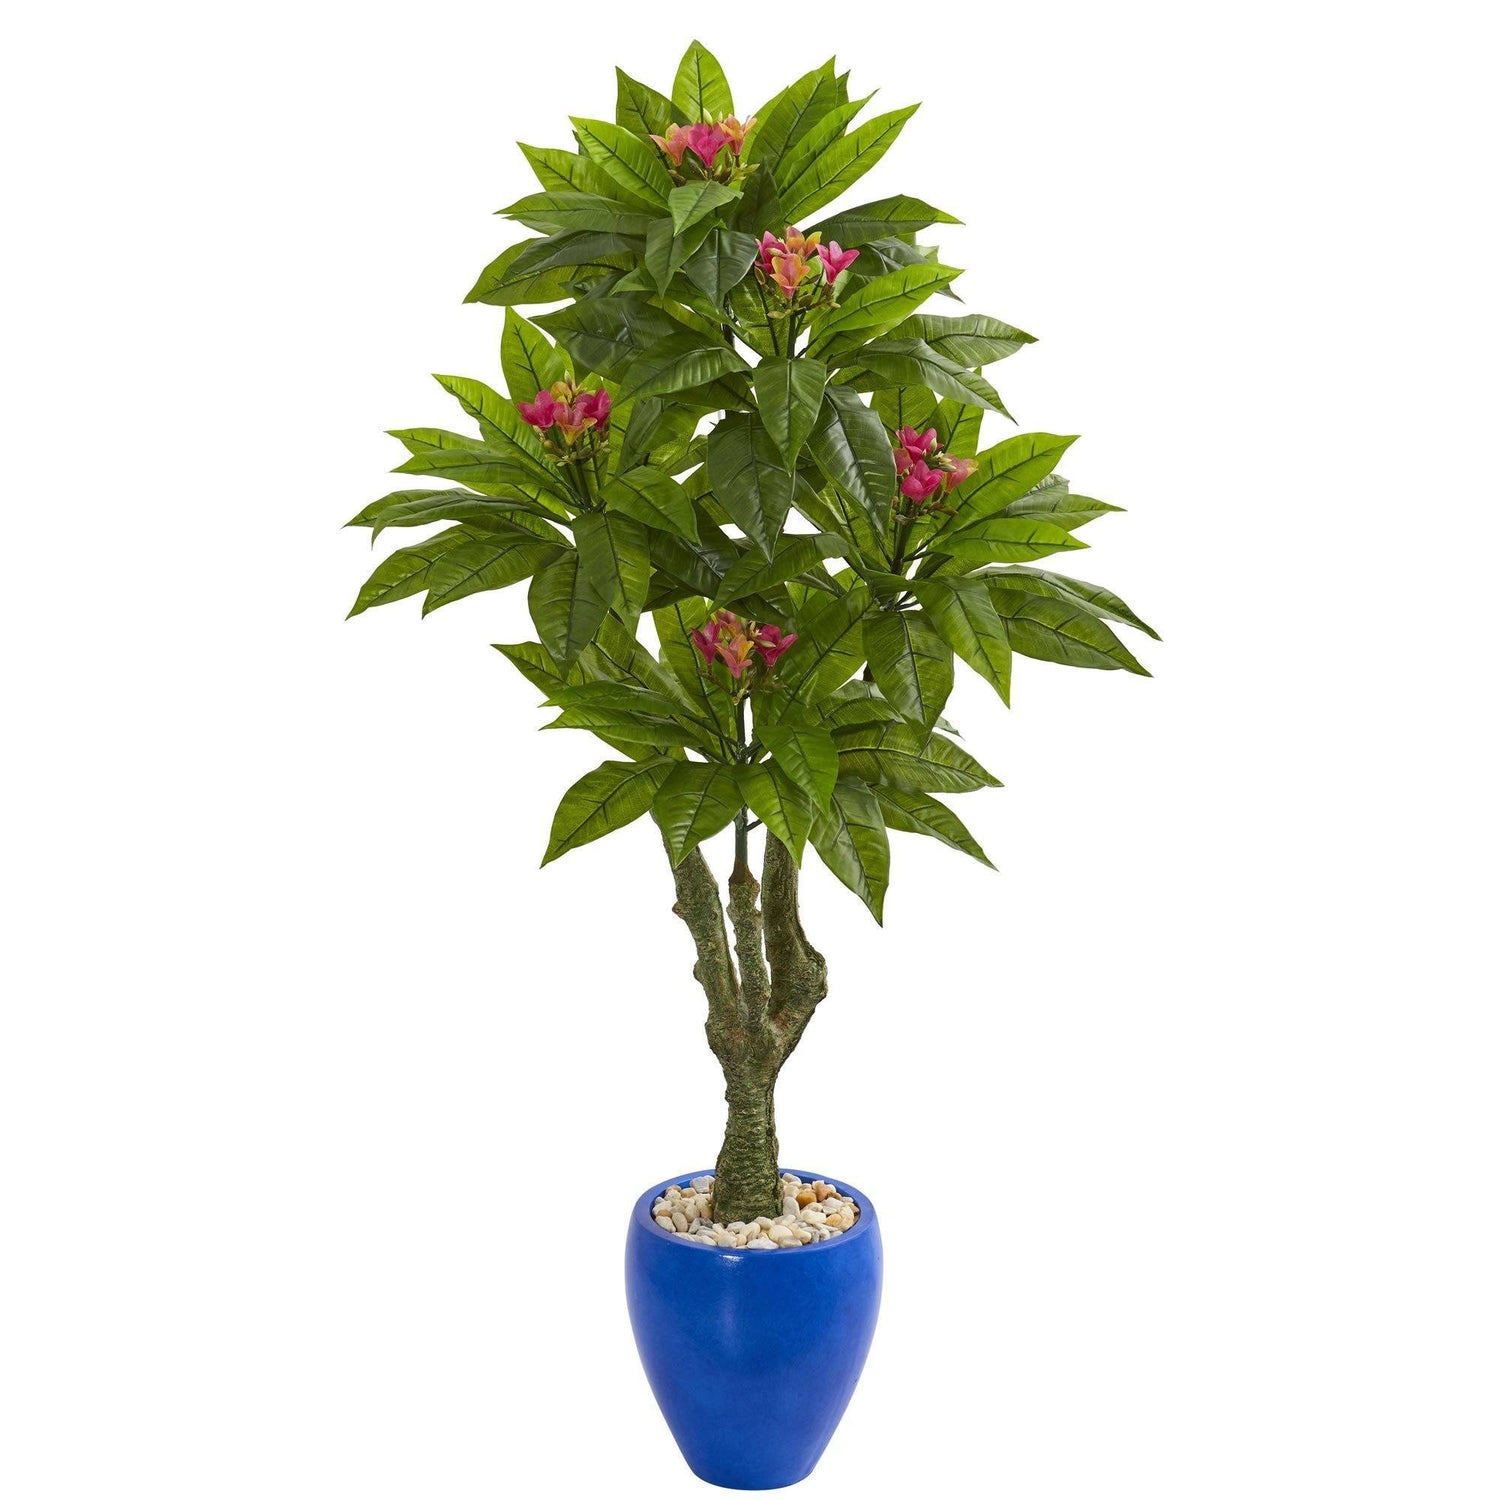 5’ Plumeria Artificial Tree in Decorative Blue Planter (Indoor/Outdoor)